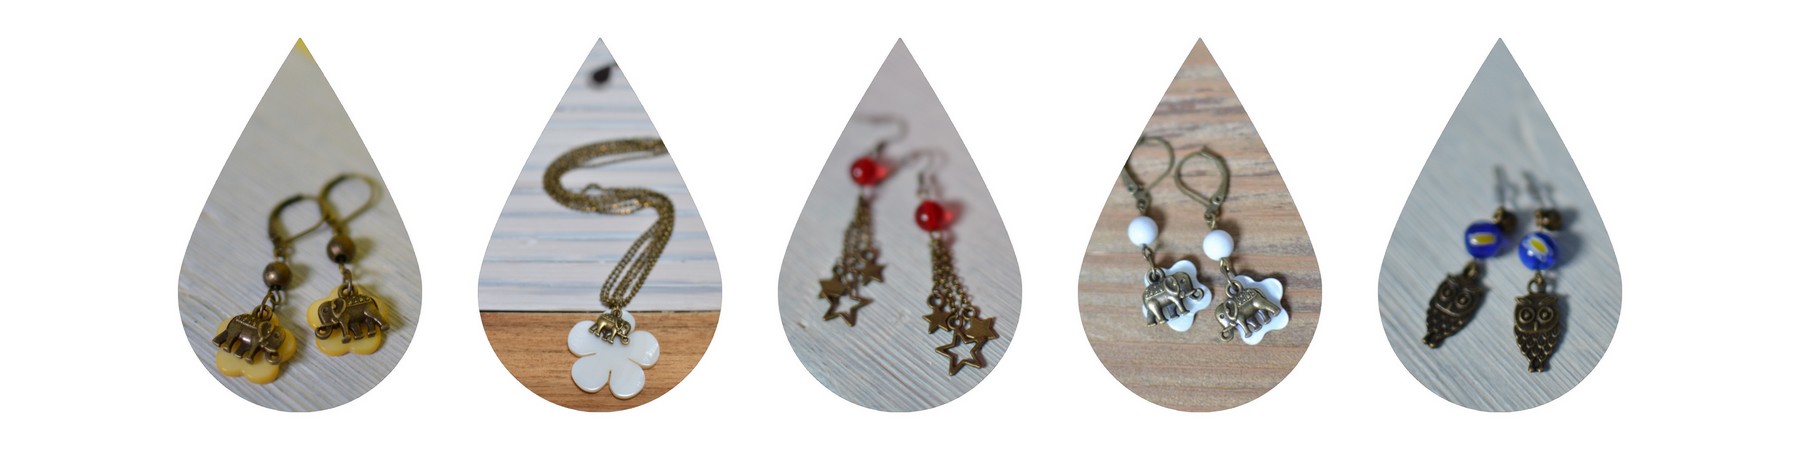 Idée cadeau pour Noël : 5 bijoux fantaisie bronze vieilli #BDJ152